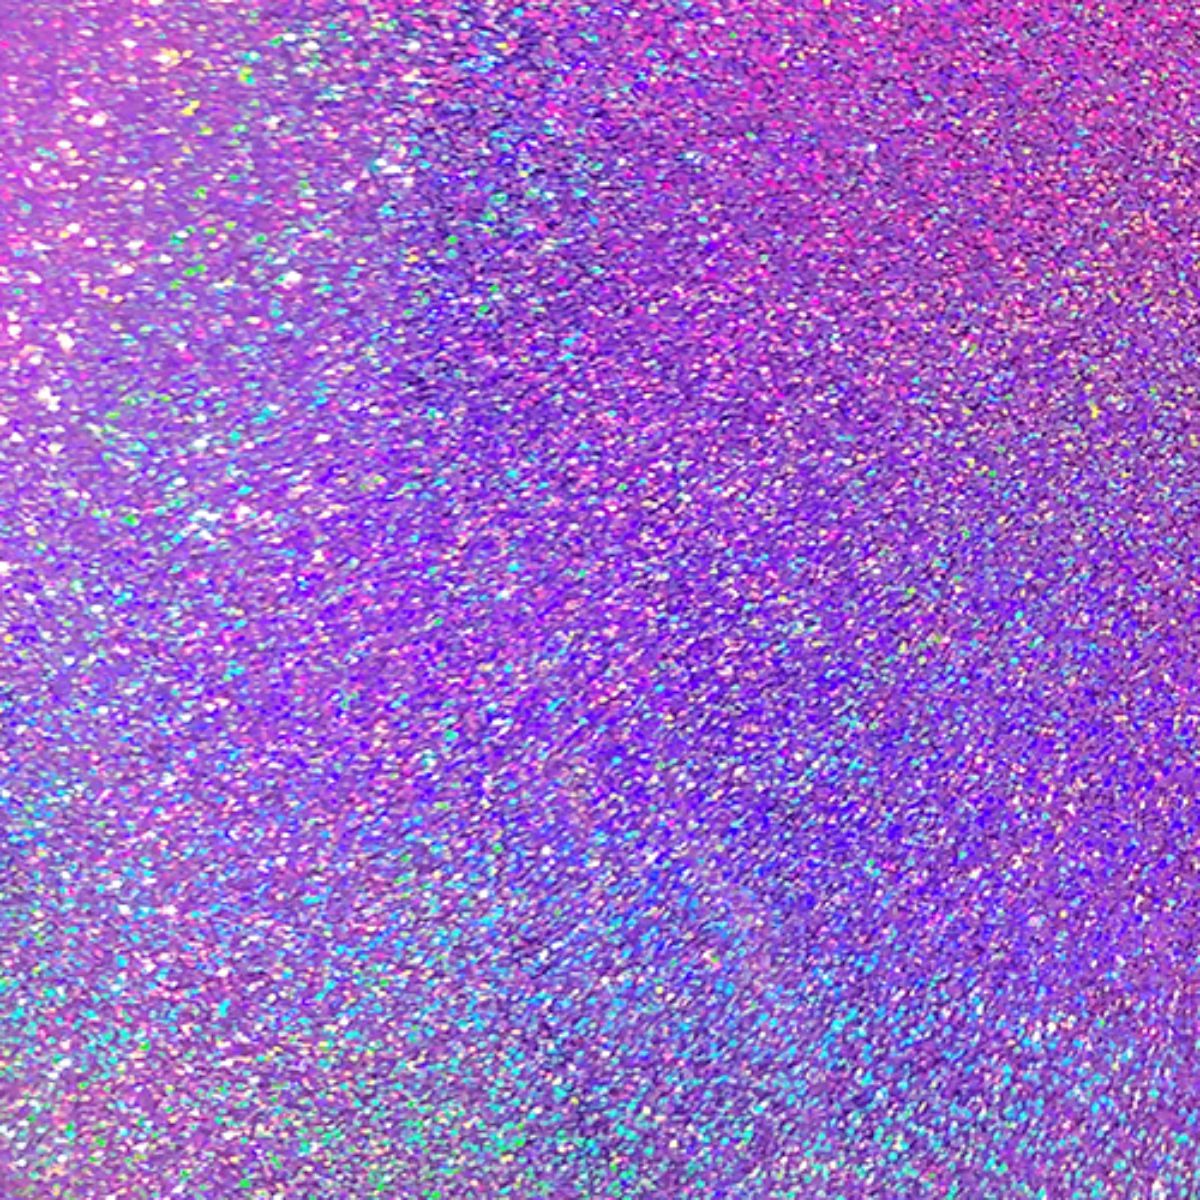 Midnight Violet - Glitter Adhesive - 12 x 24 